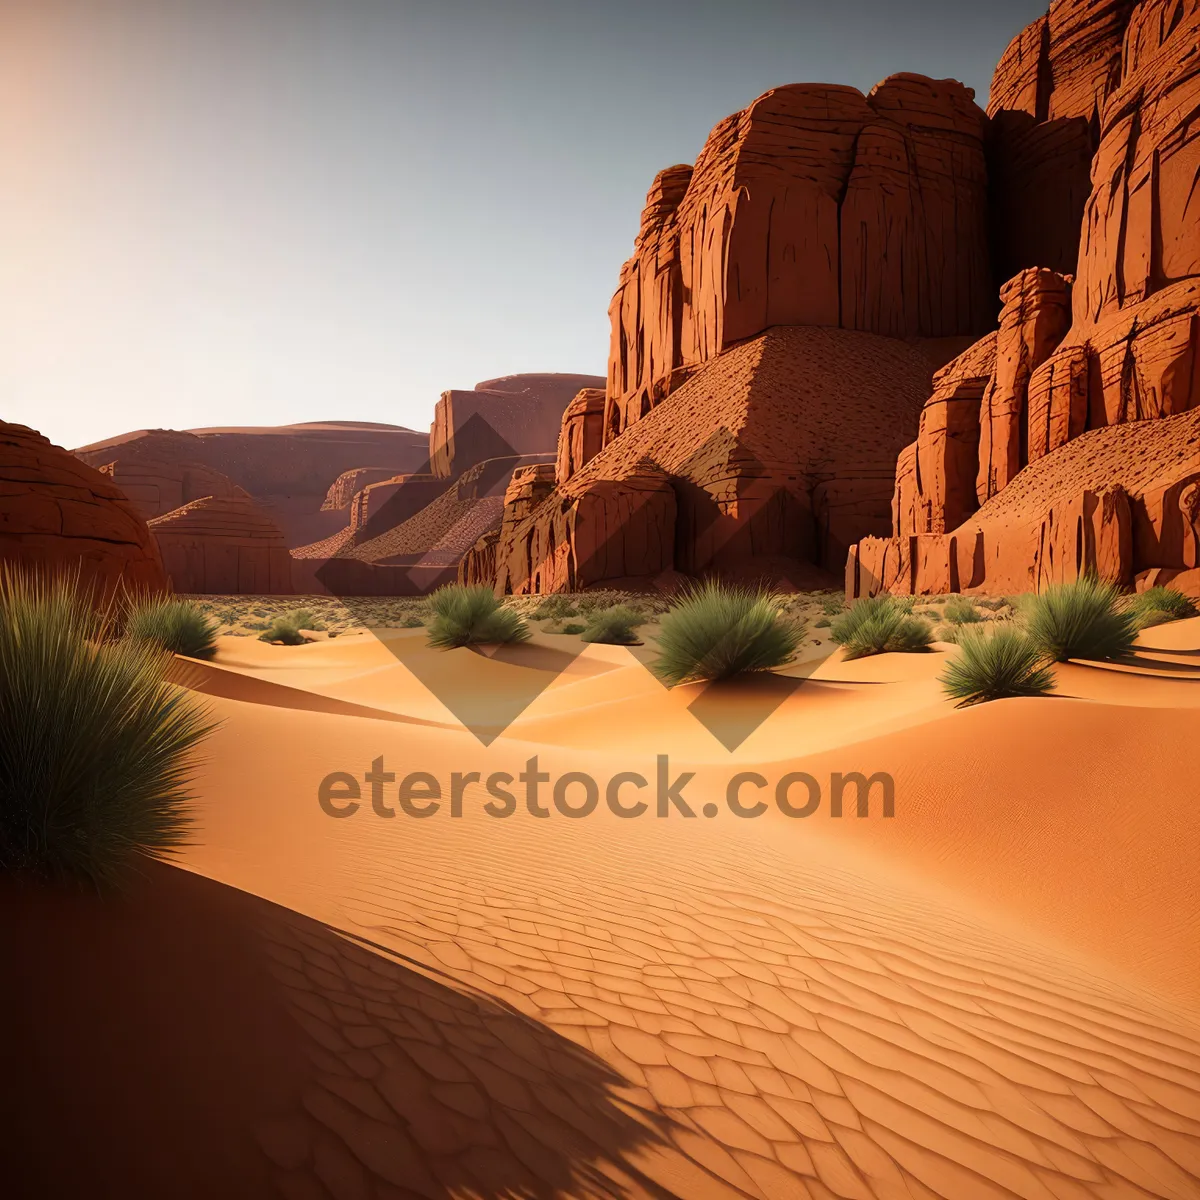 Picture of Desert Majesty: Awe-inspiring Sandstone Canyon Landscape